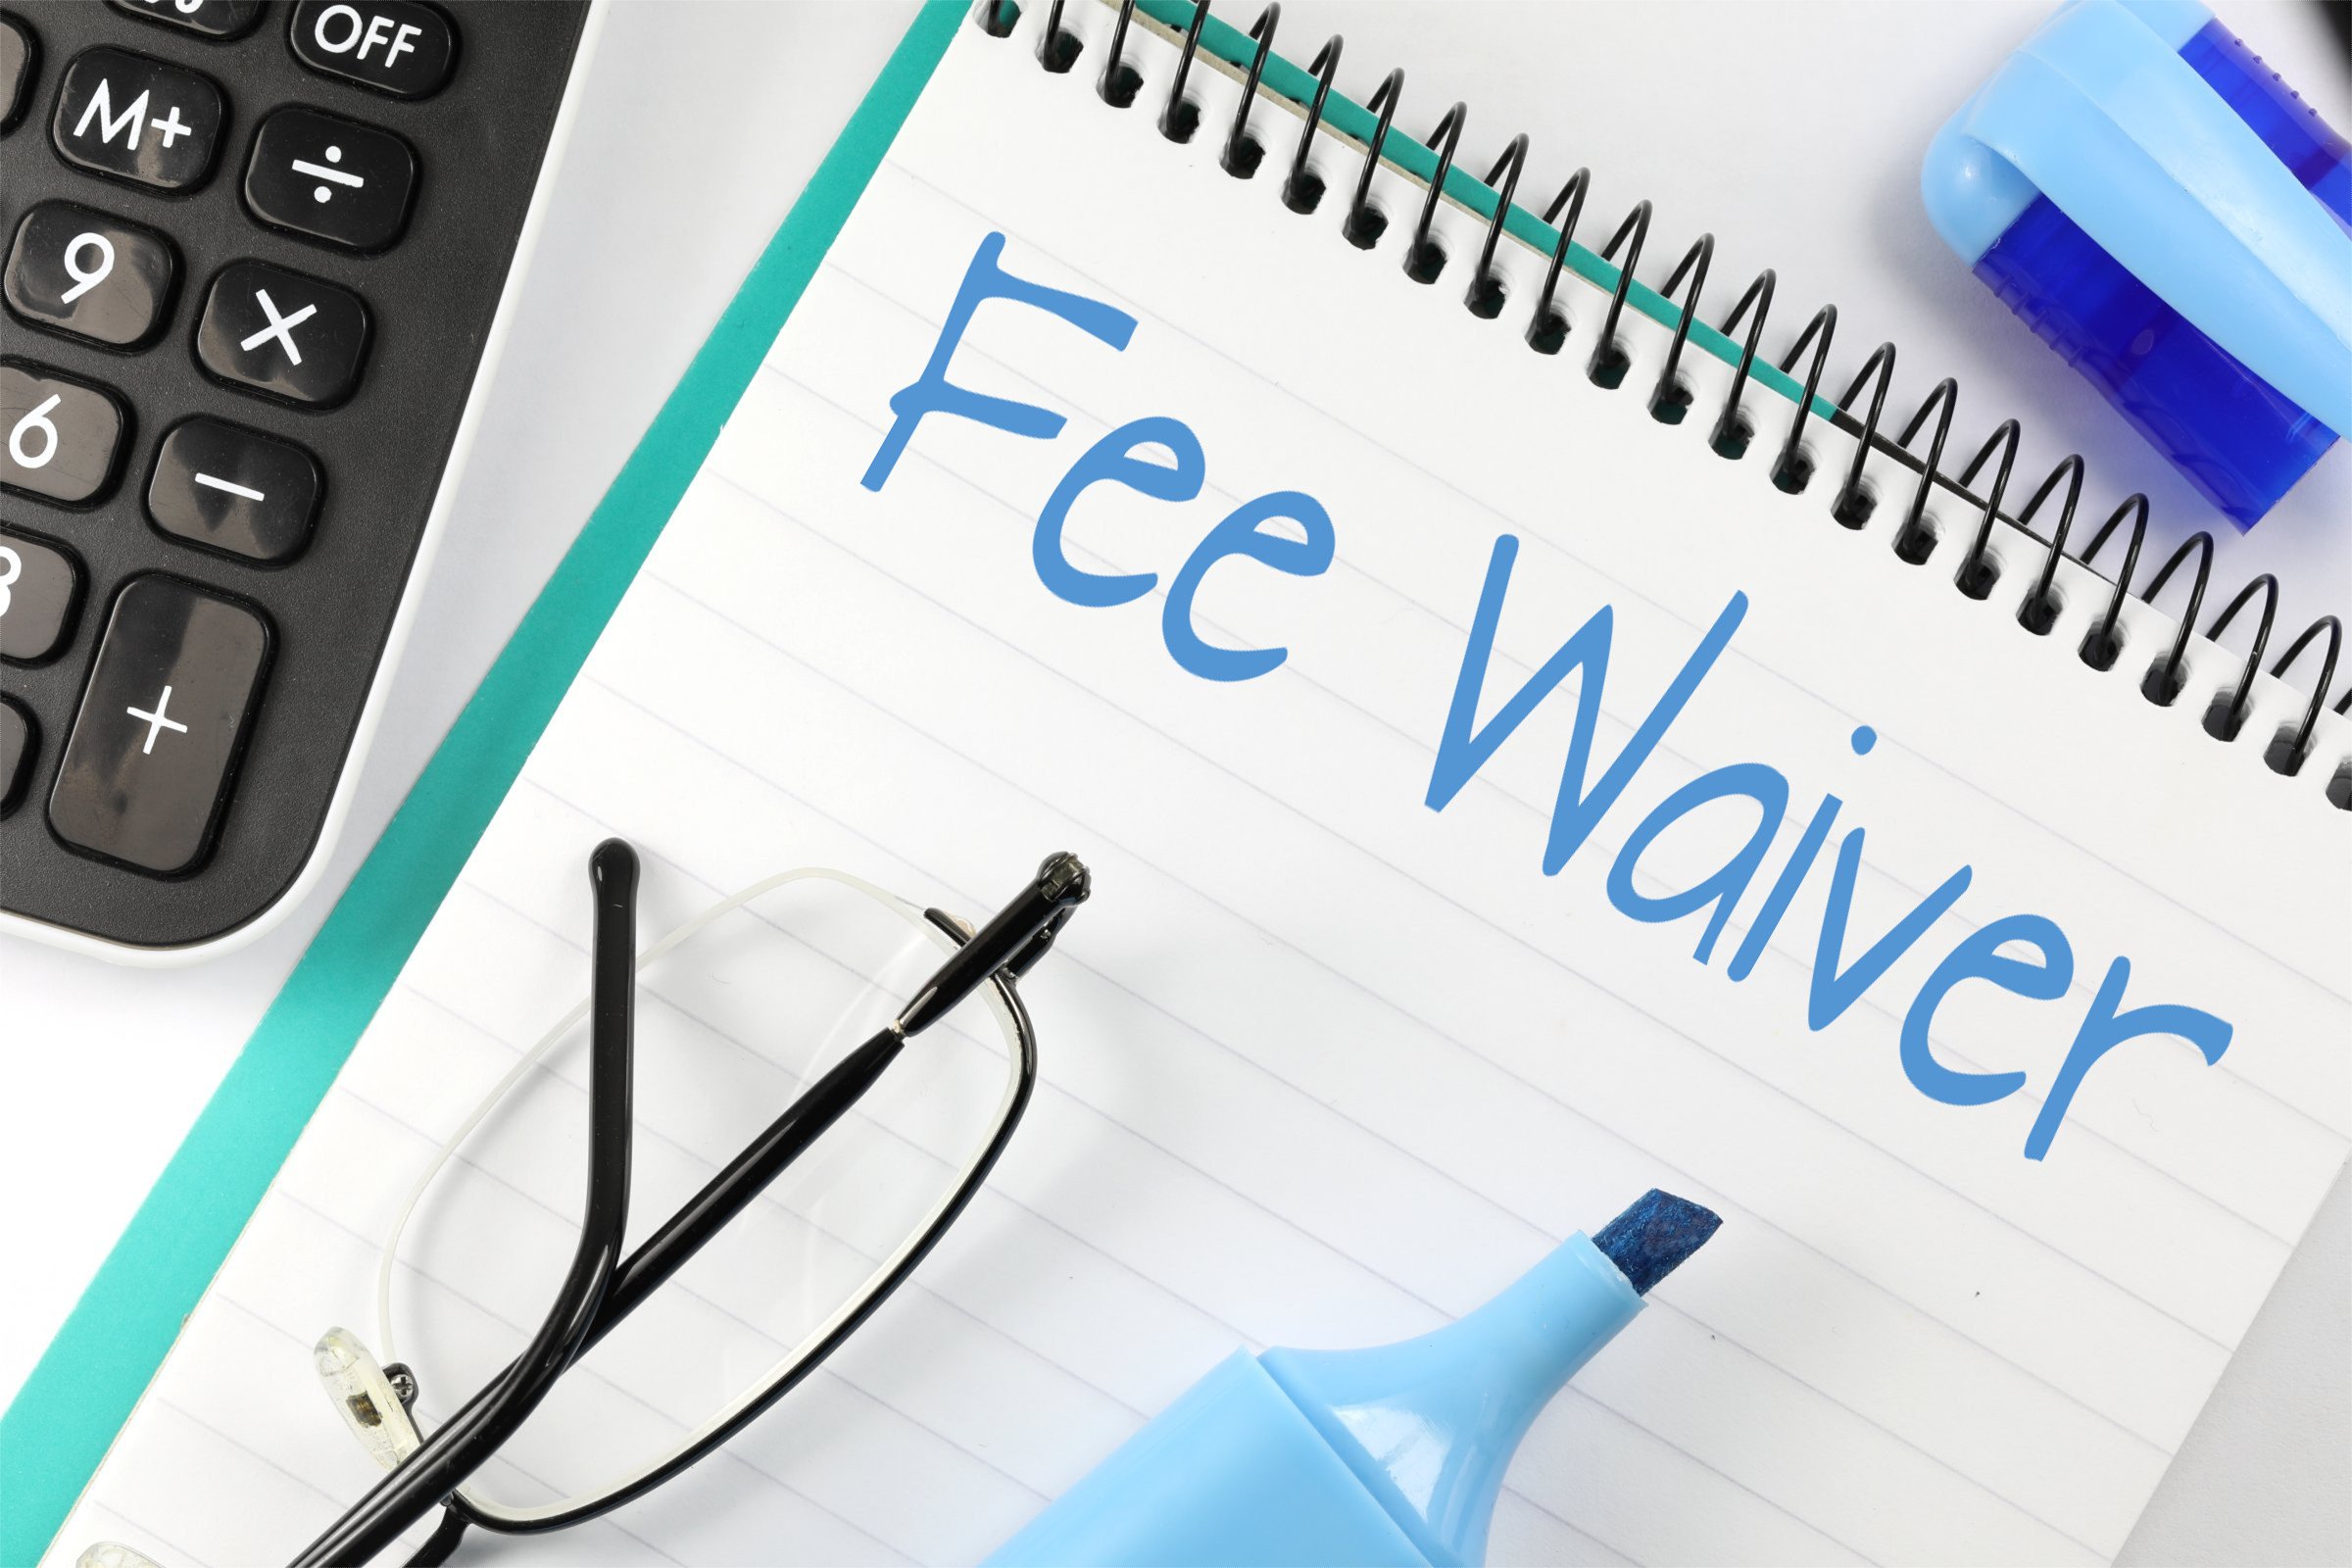 fee waiver